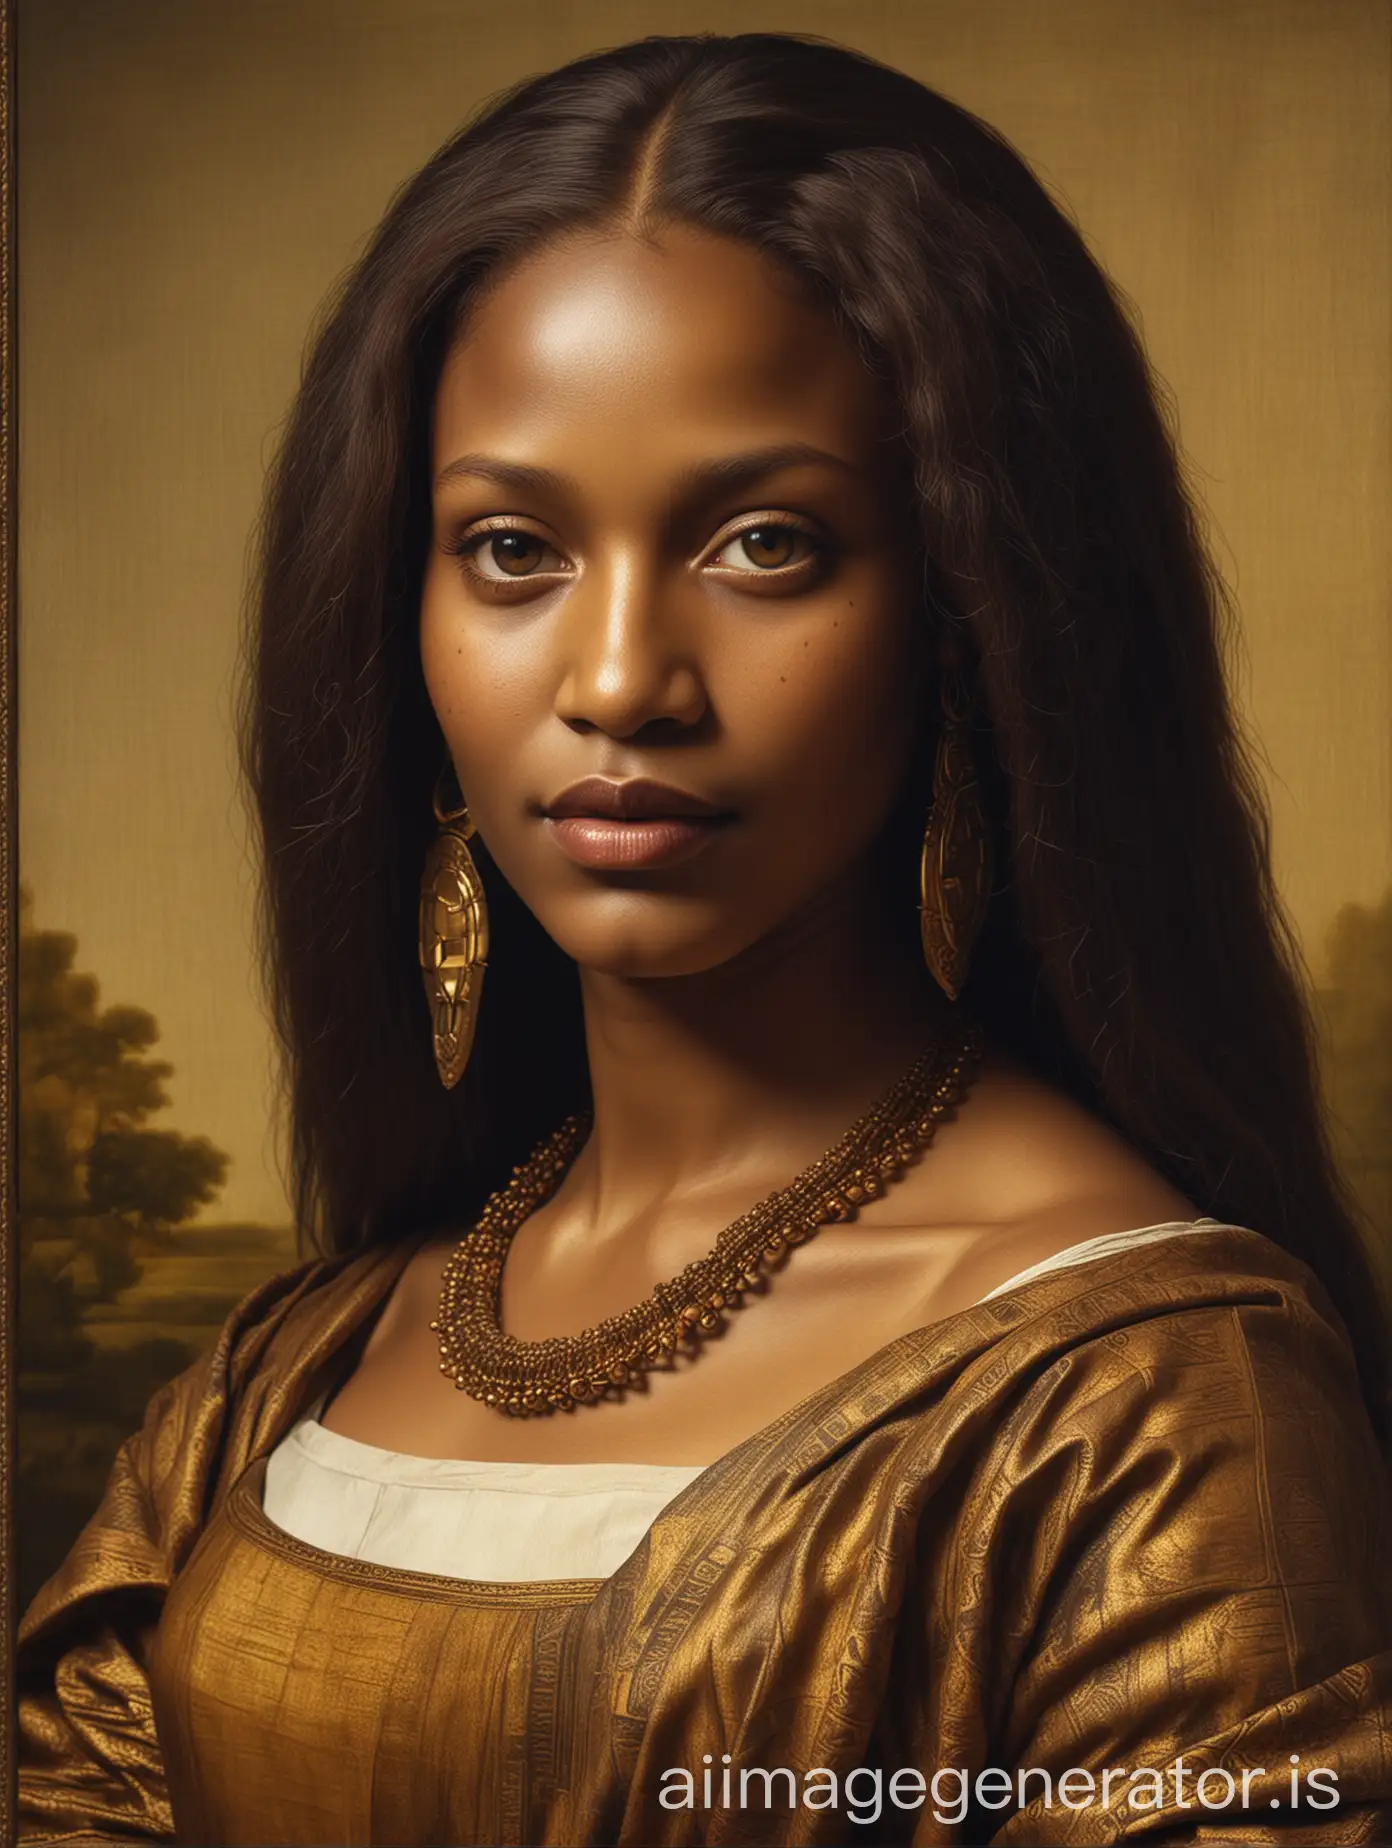 reimagine the mona lisa as mama african woman